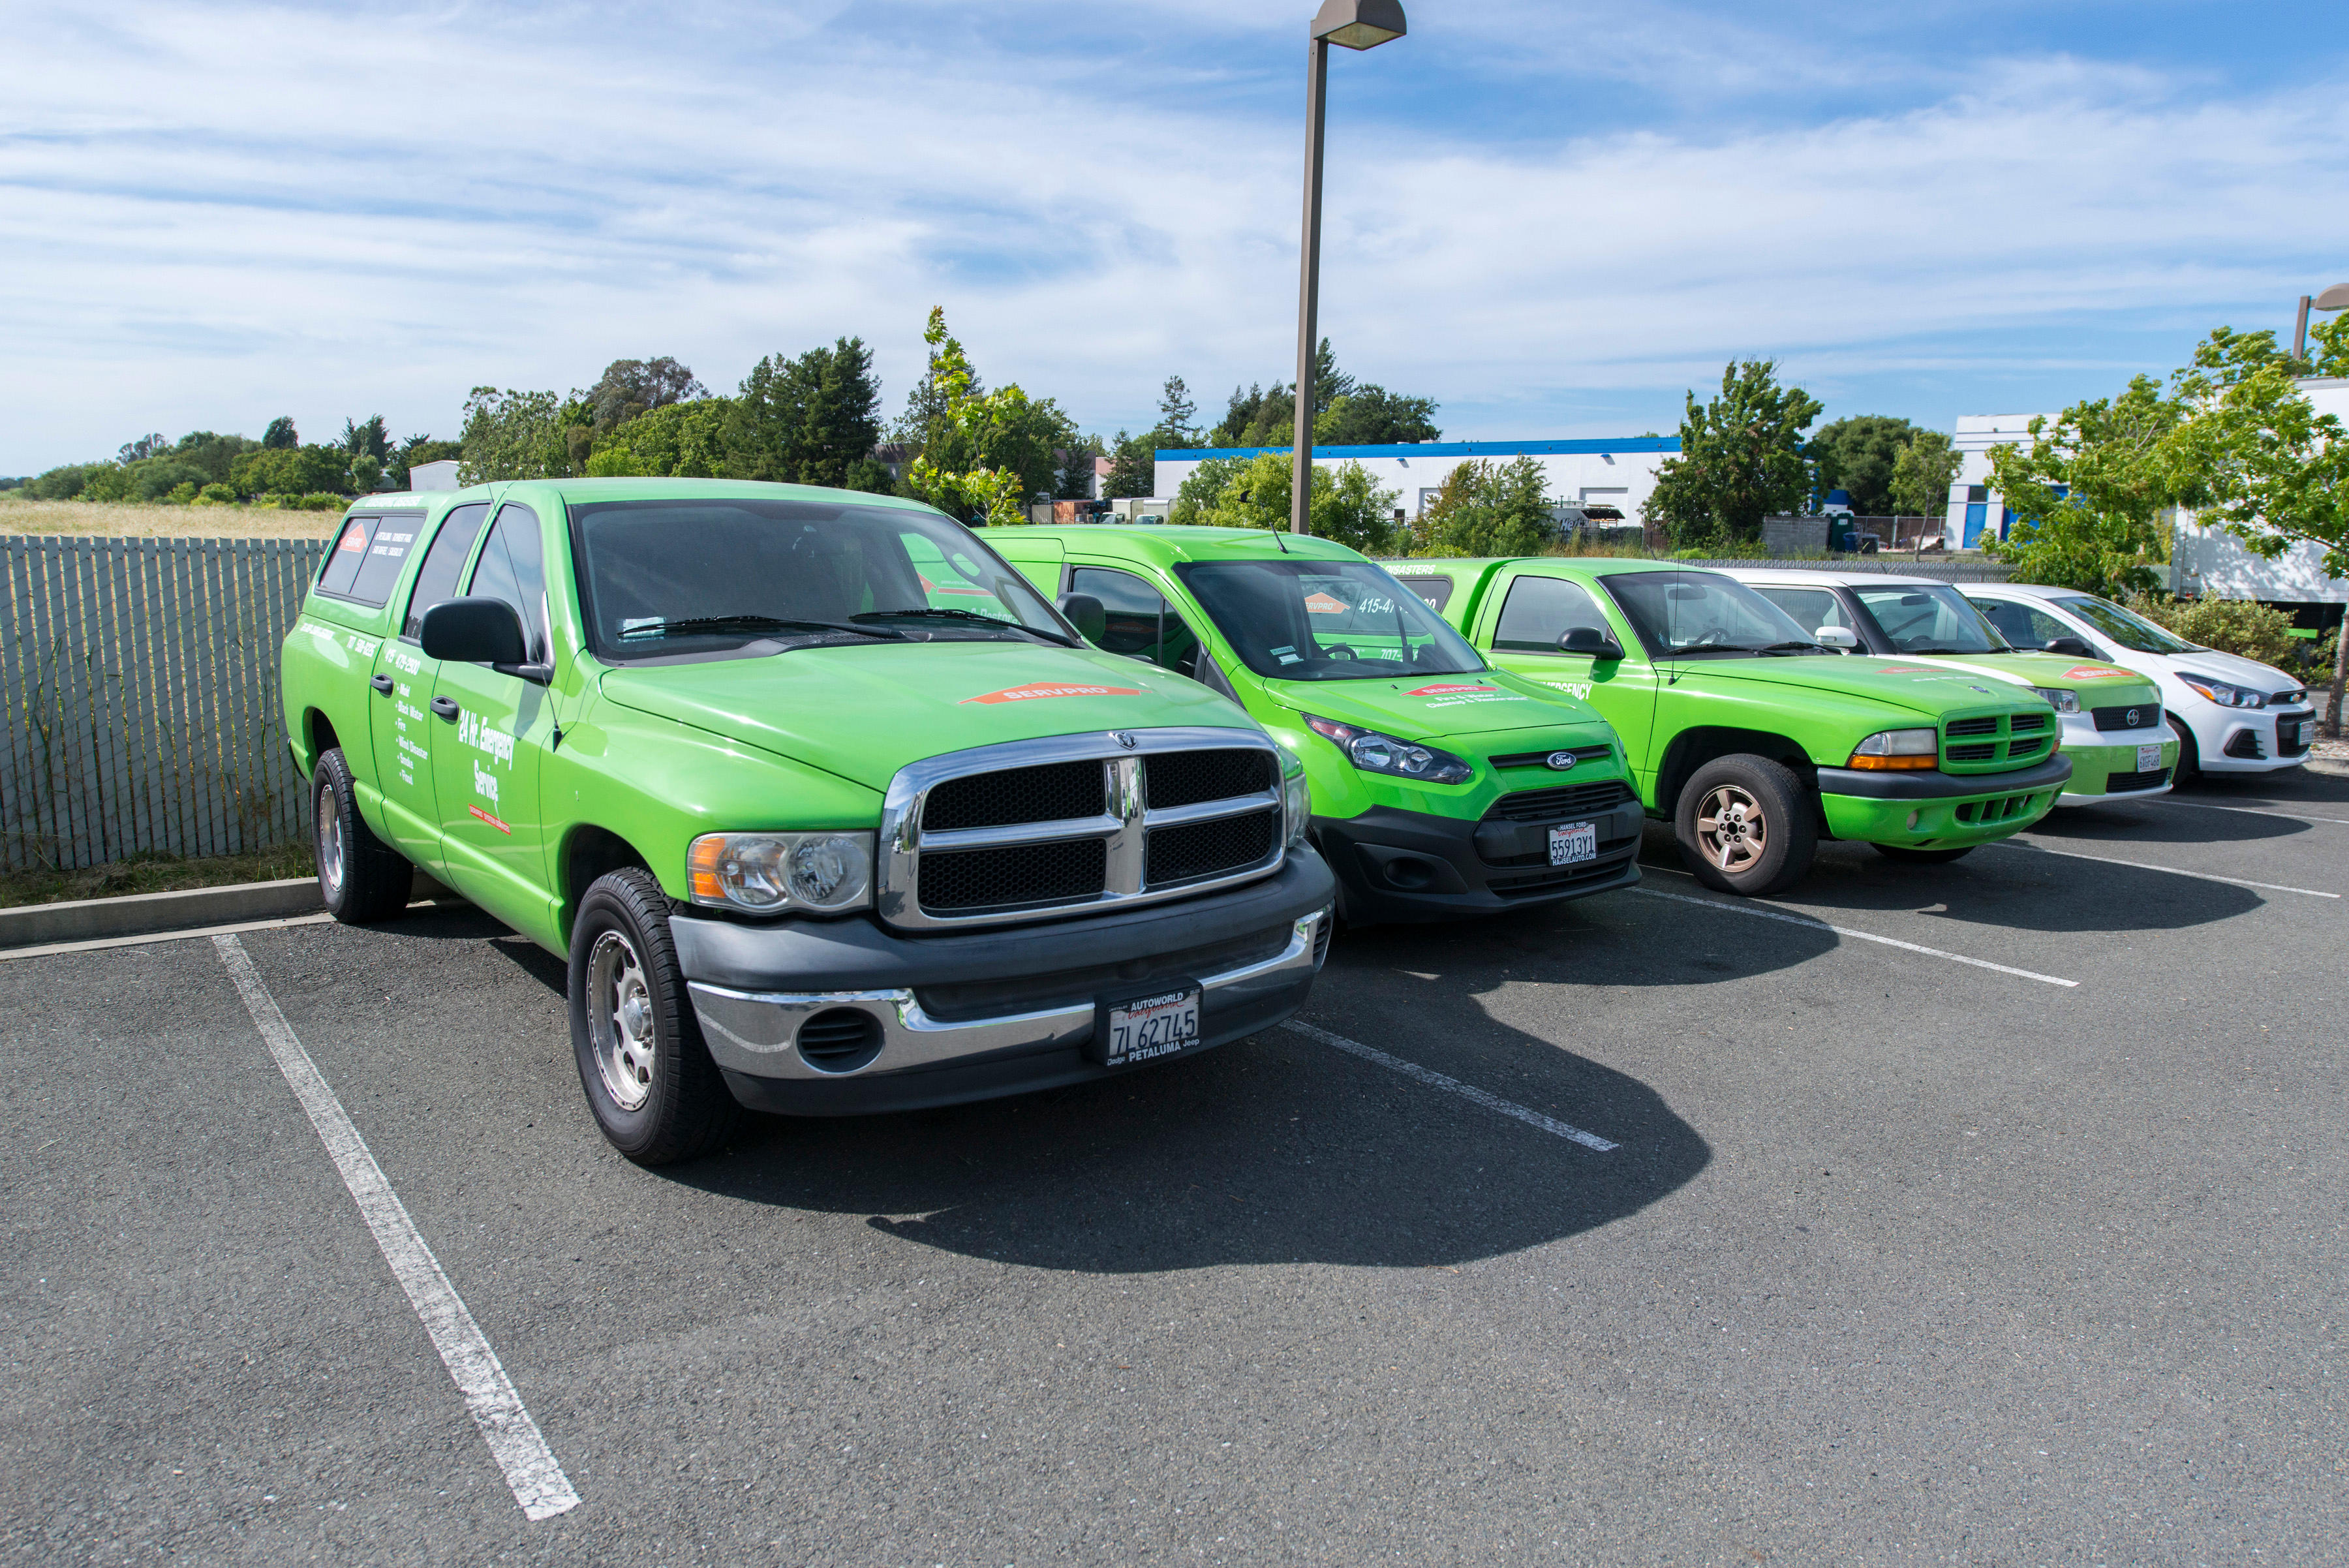 SERVPRO of Petaluma/Rohnert Park/Santa Rosa official bright green vehicles used for damage restoration services.